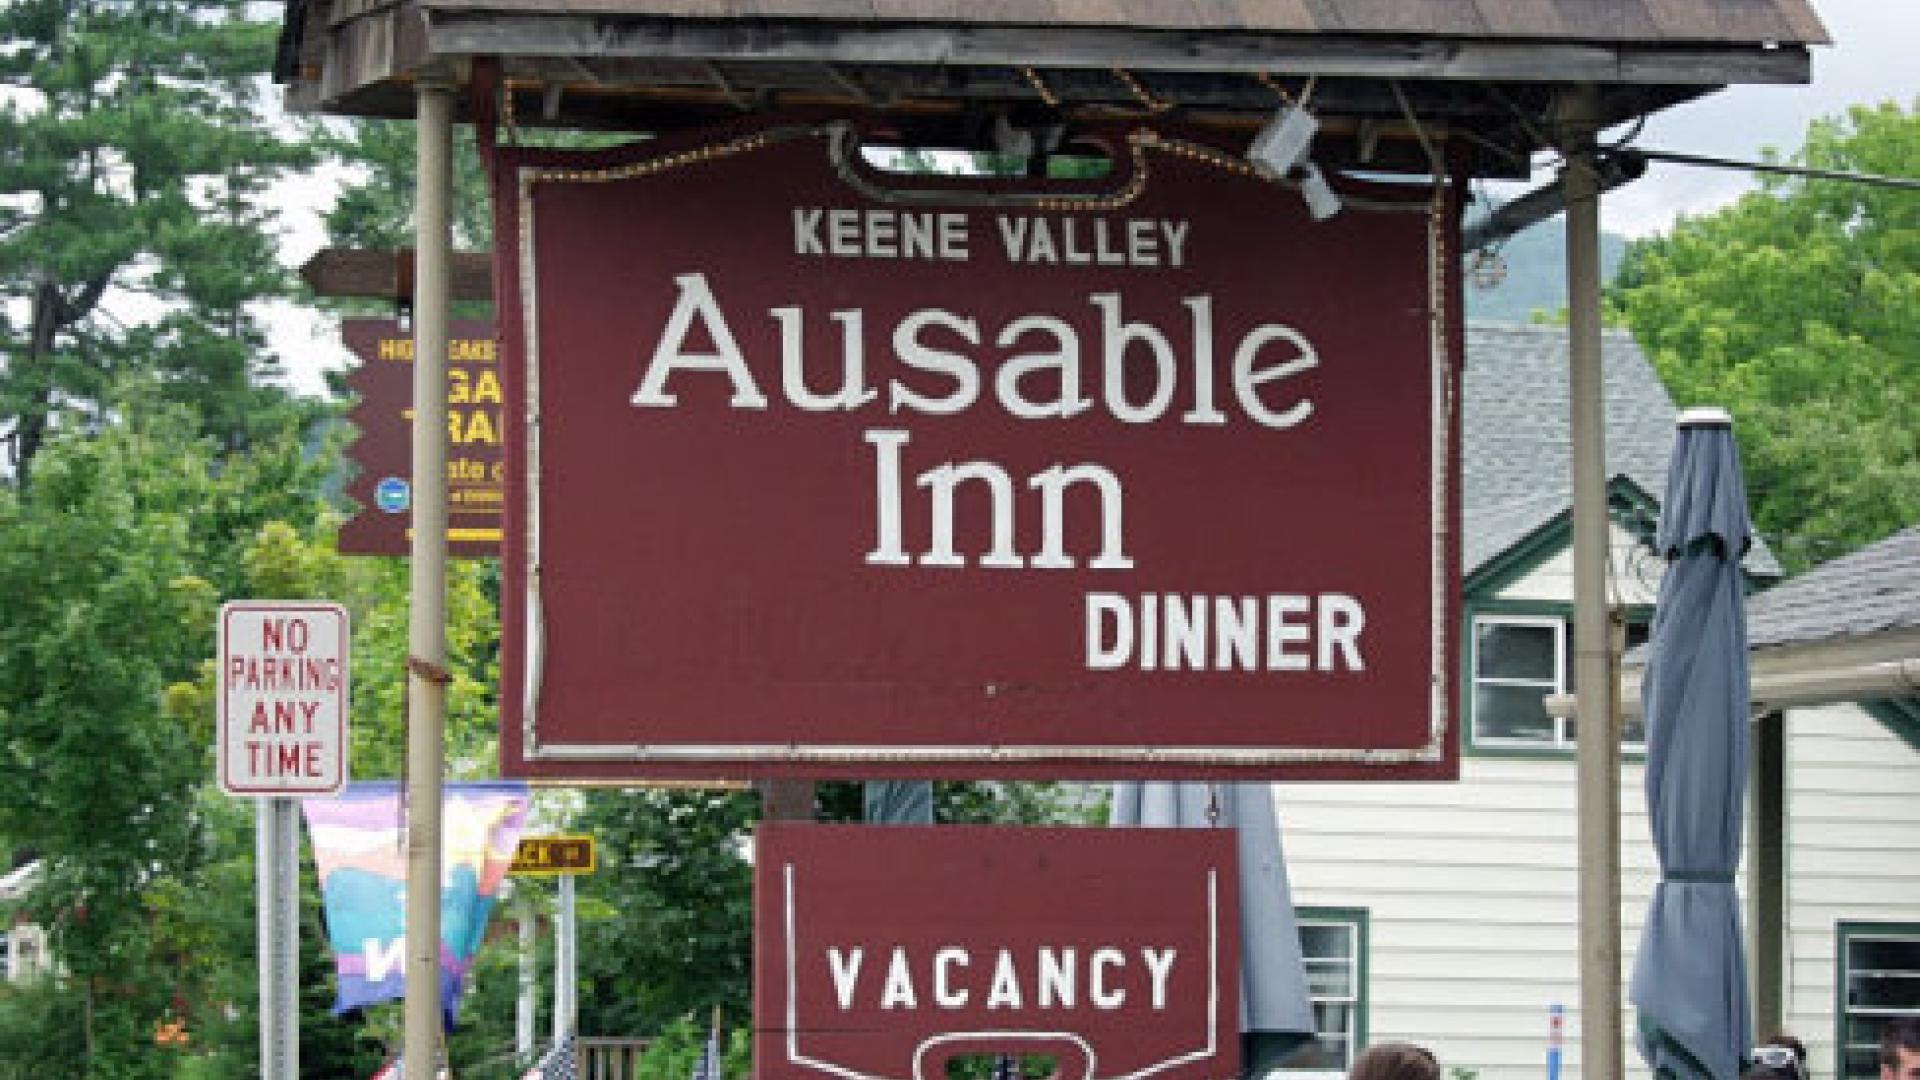 Keene Valley Ausable Inn